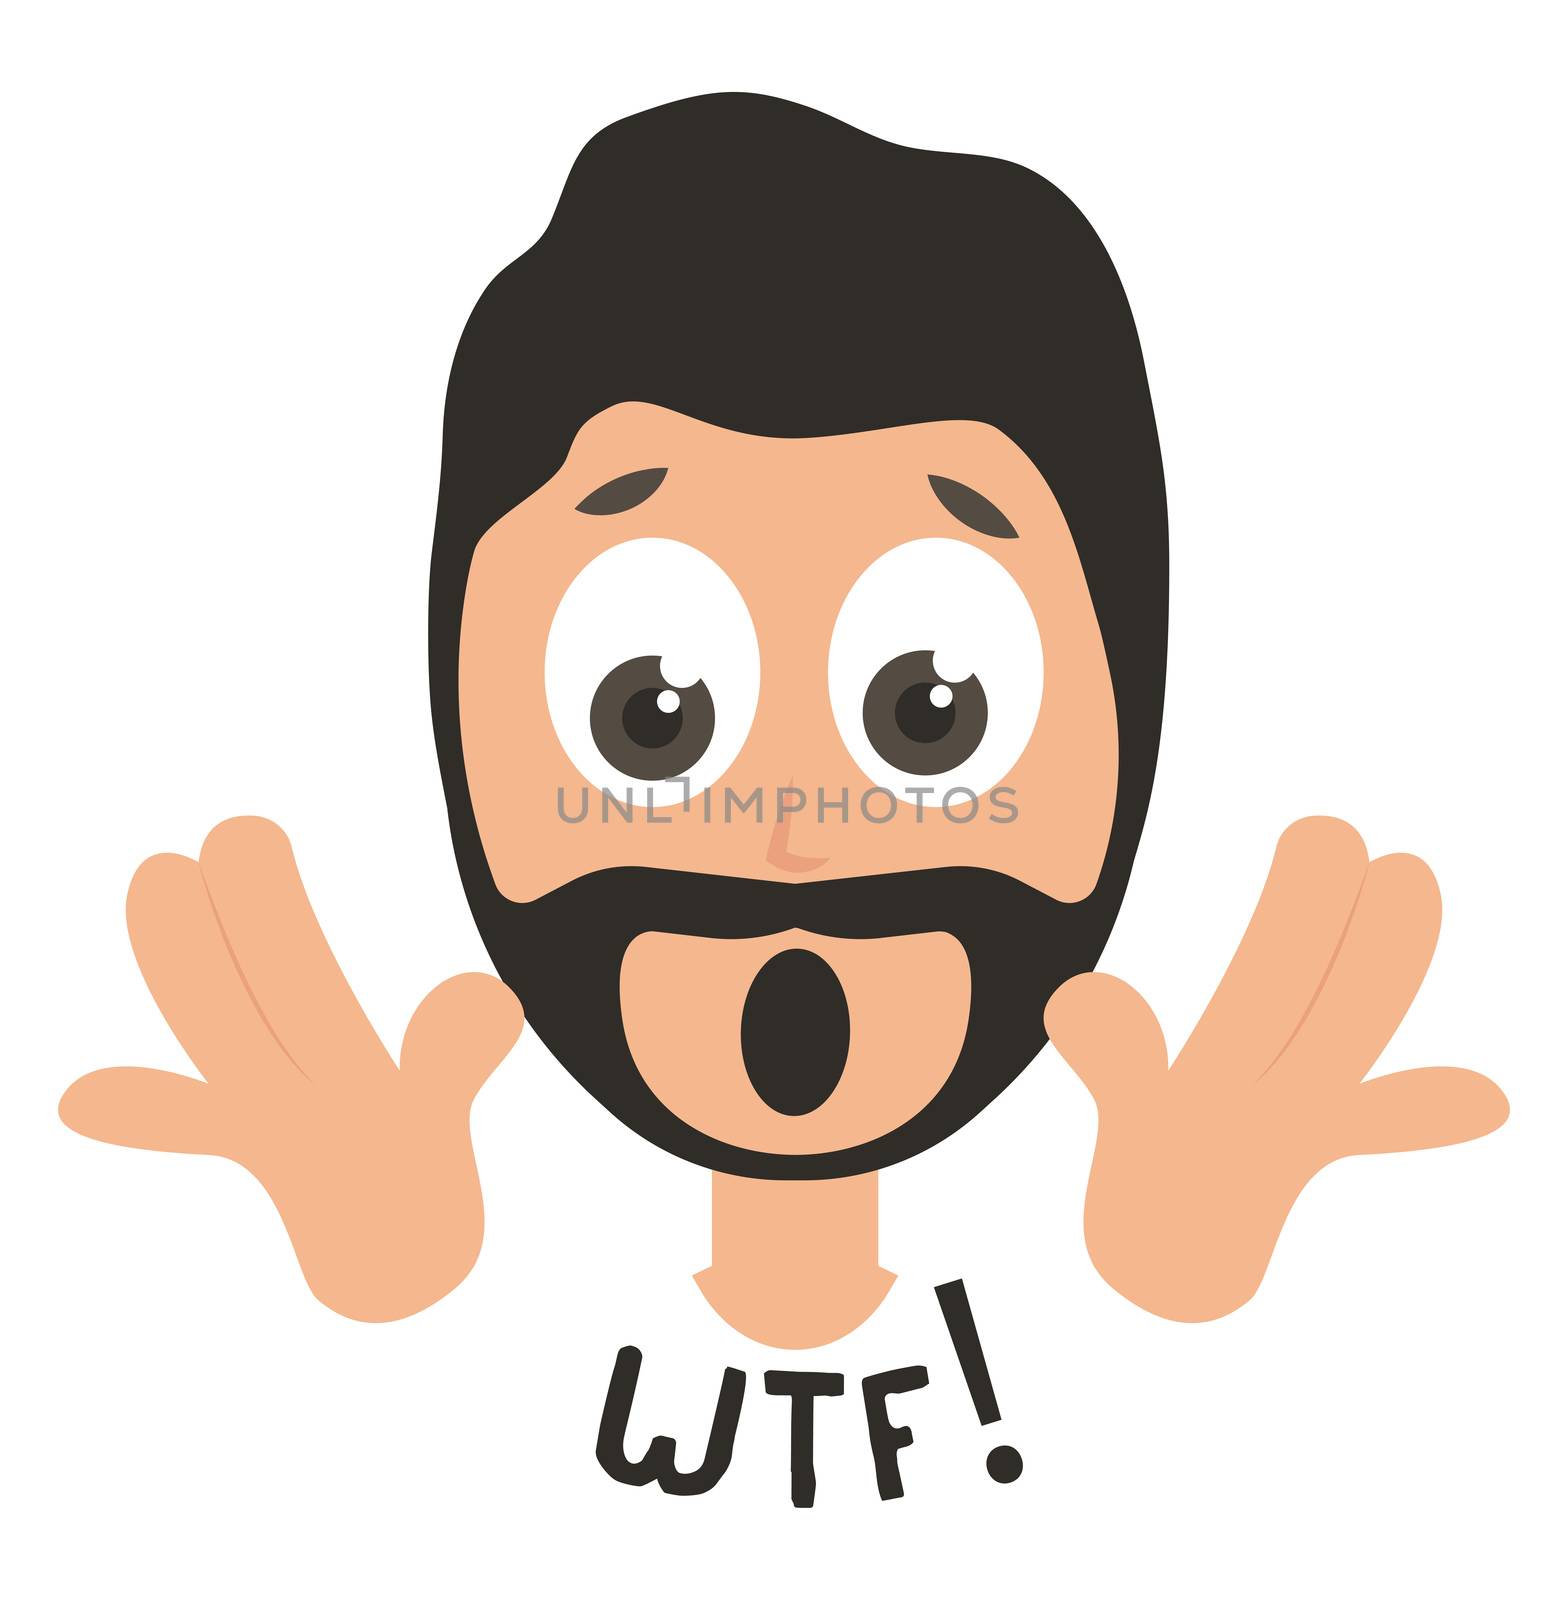 Shocked man emoji, illustration, vector on white background